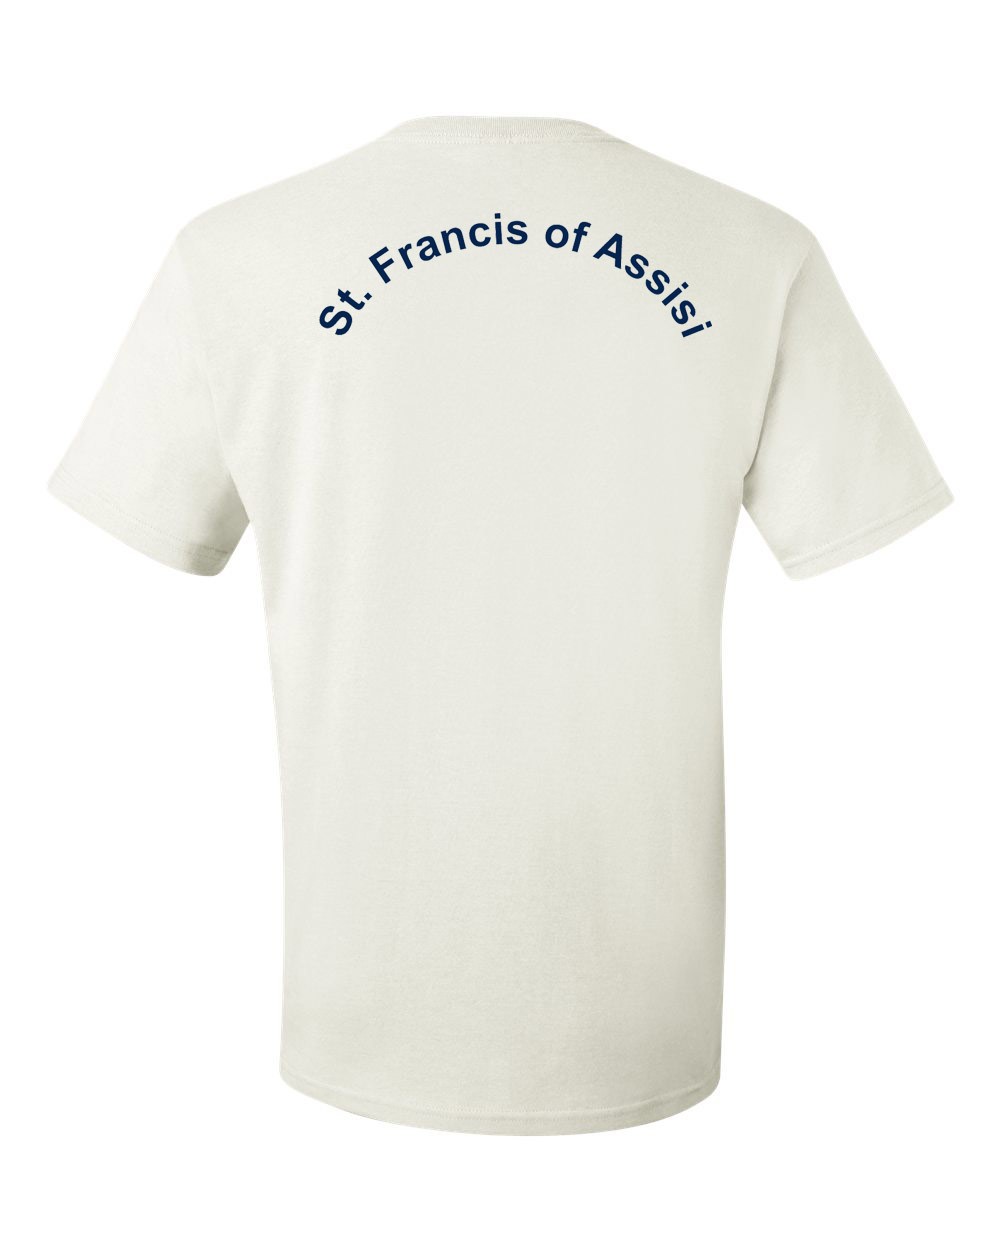 SFA White S/S Gym T-Shirt w/ School Logo